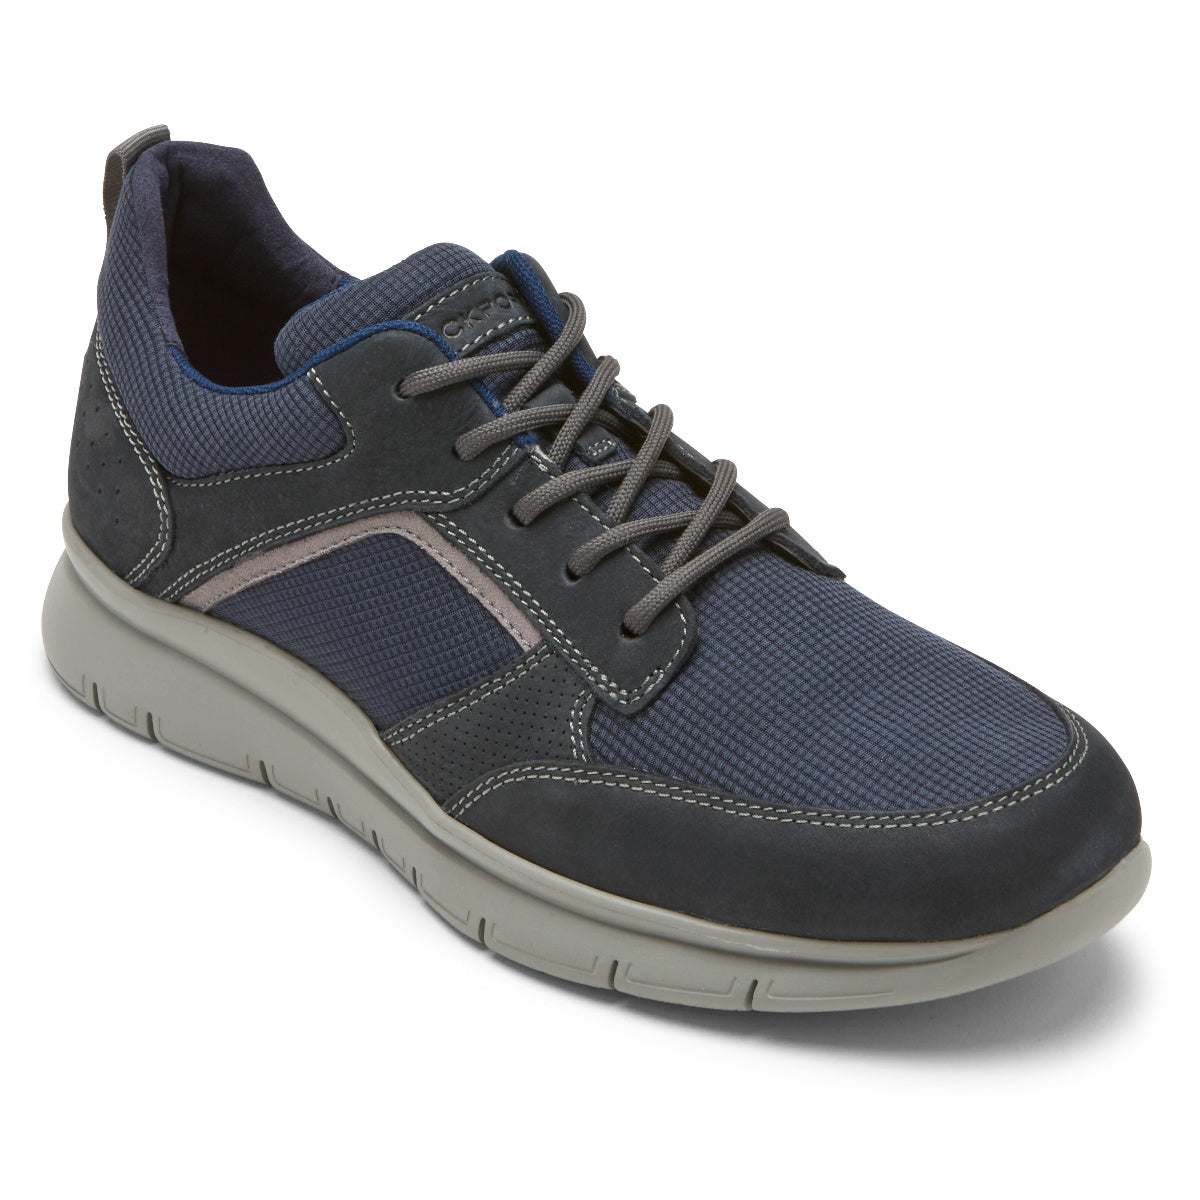 Men's Primetime Casual Mudguard Sneaker – Rockport